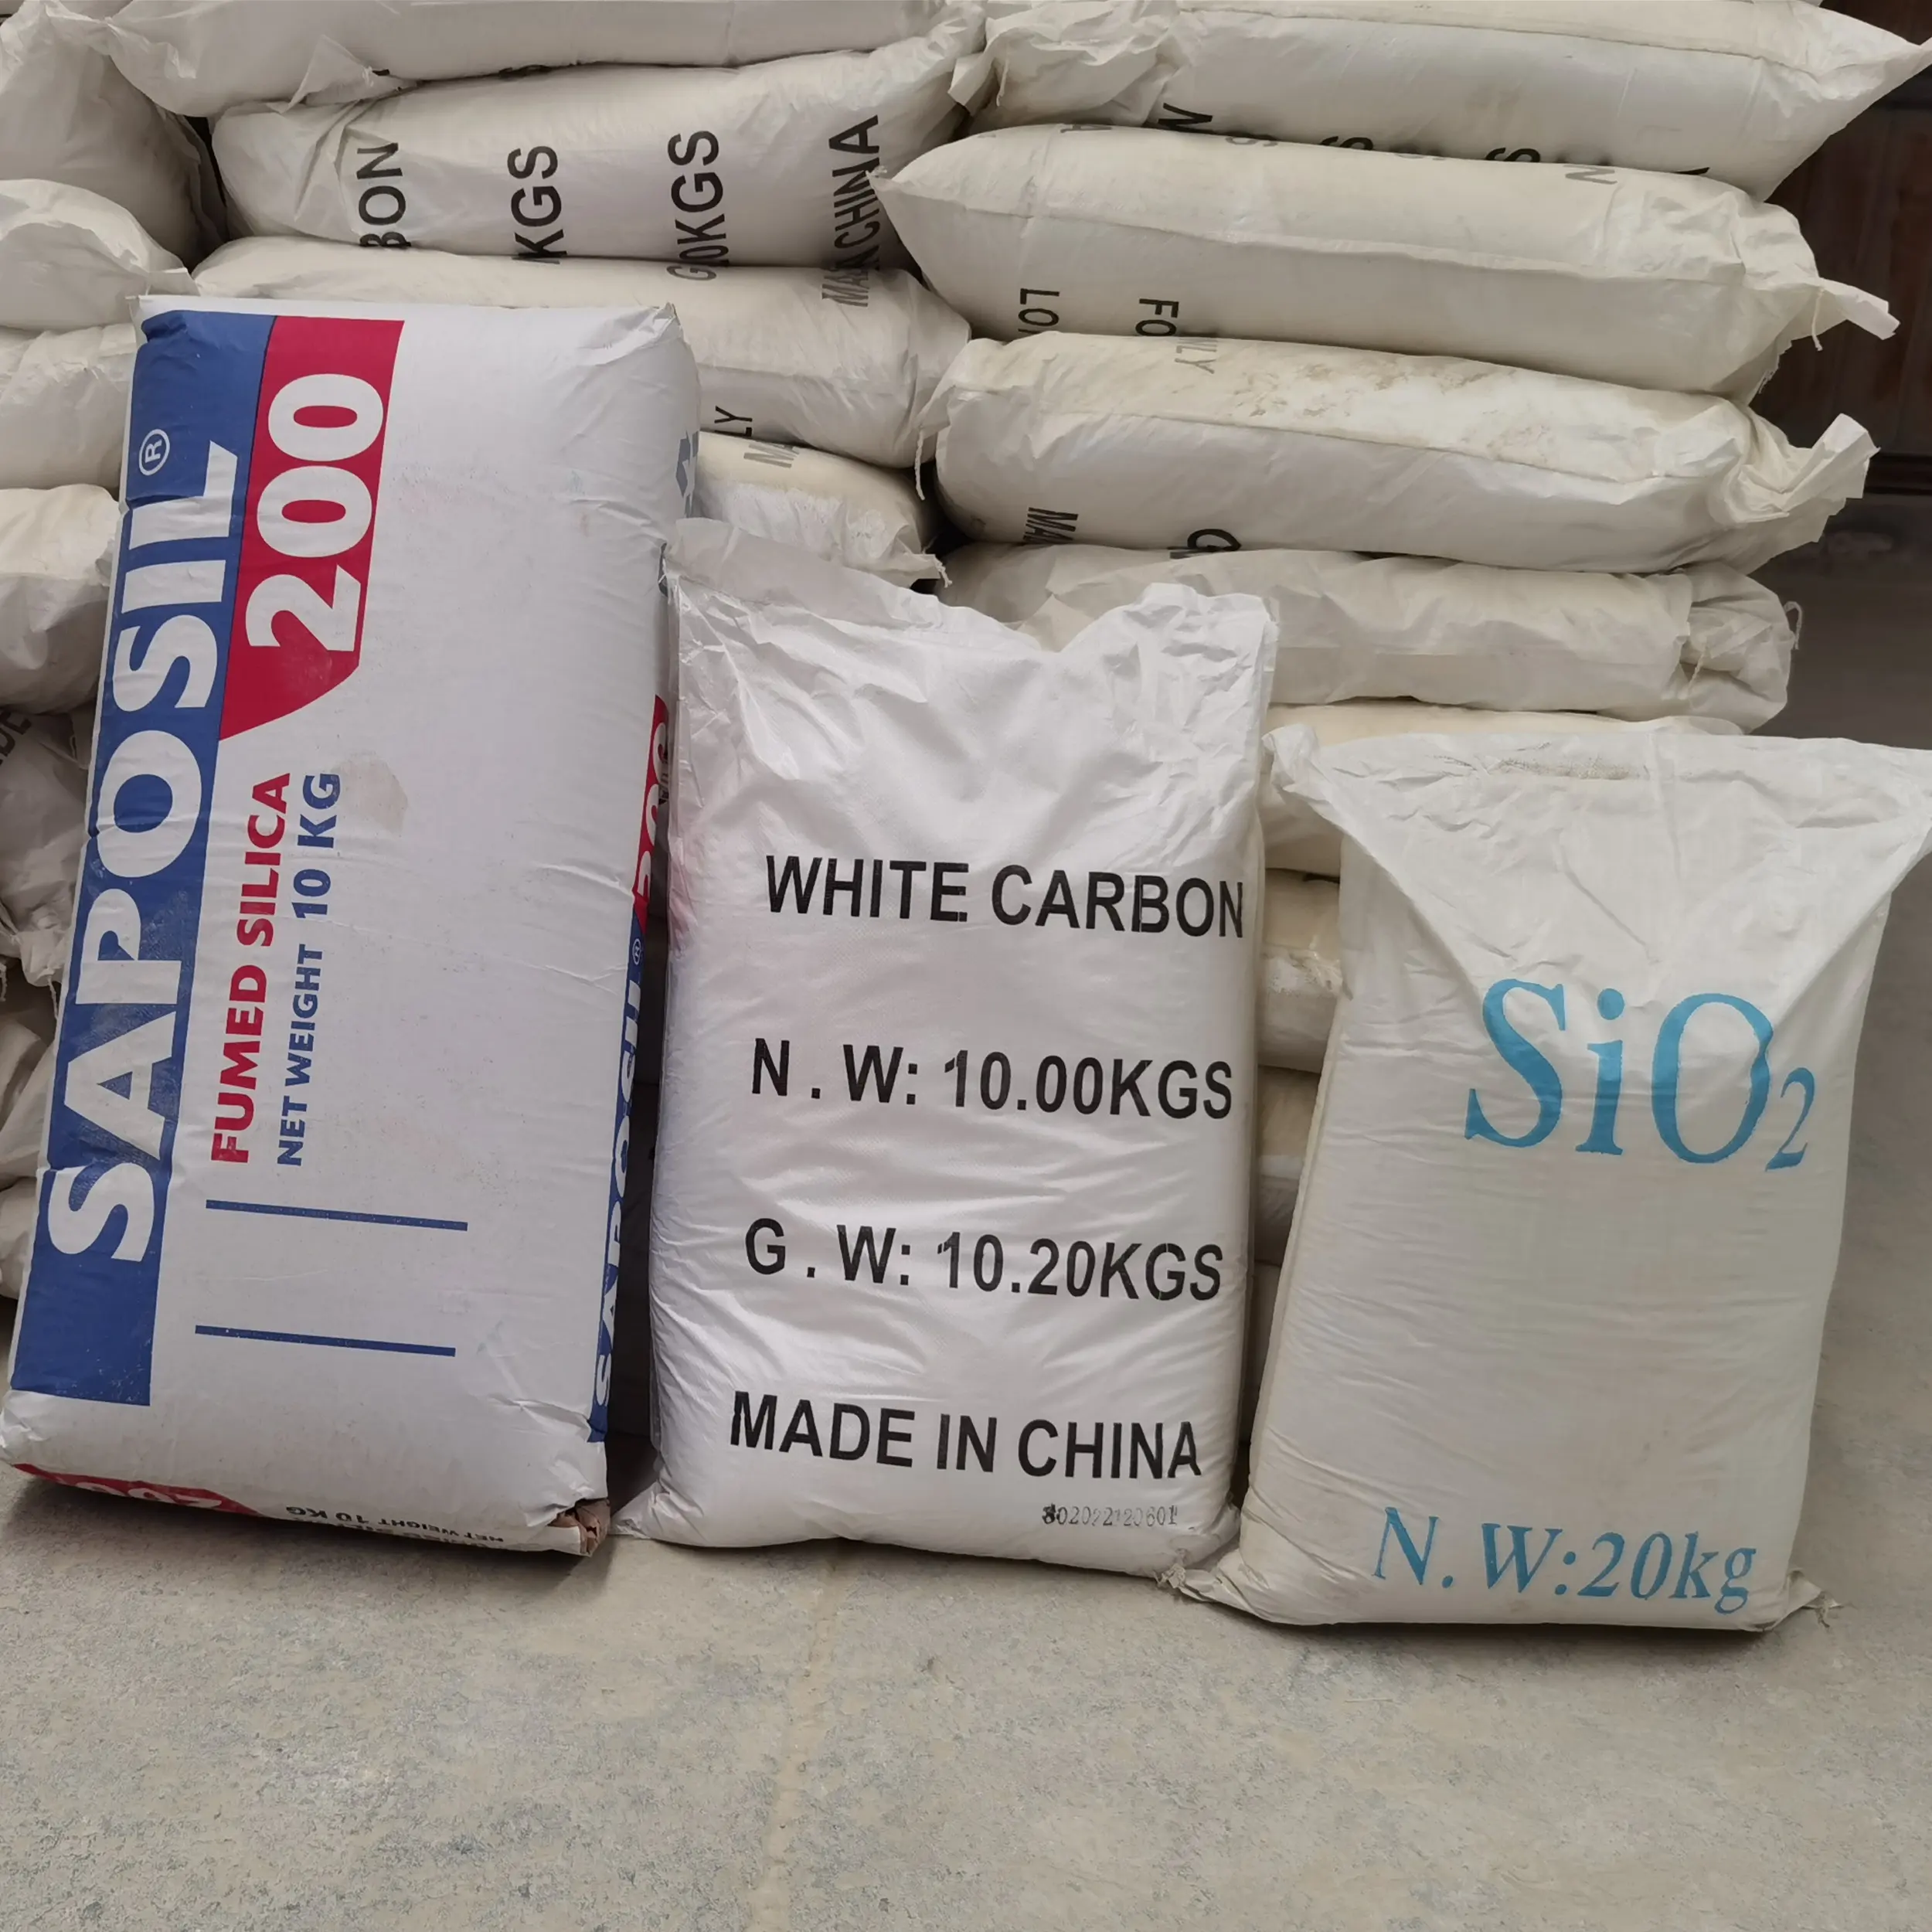 सफेद SiO2 धूआंयुक्त सिलिका 99% SiO2 सामग्री, महीन सफेद धूआंयुक्त सिलिका पाउडर कीमत रबर के लिए सफेद कार्बन काला